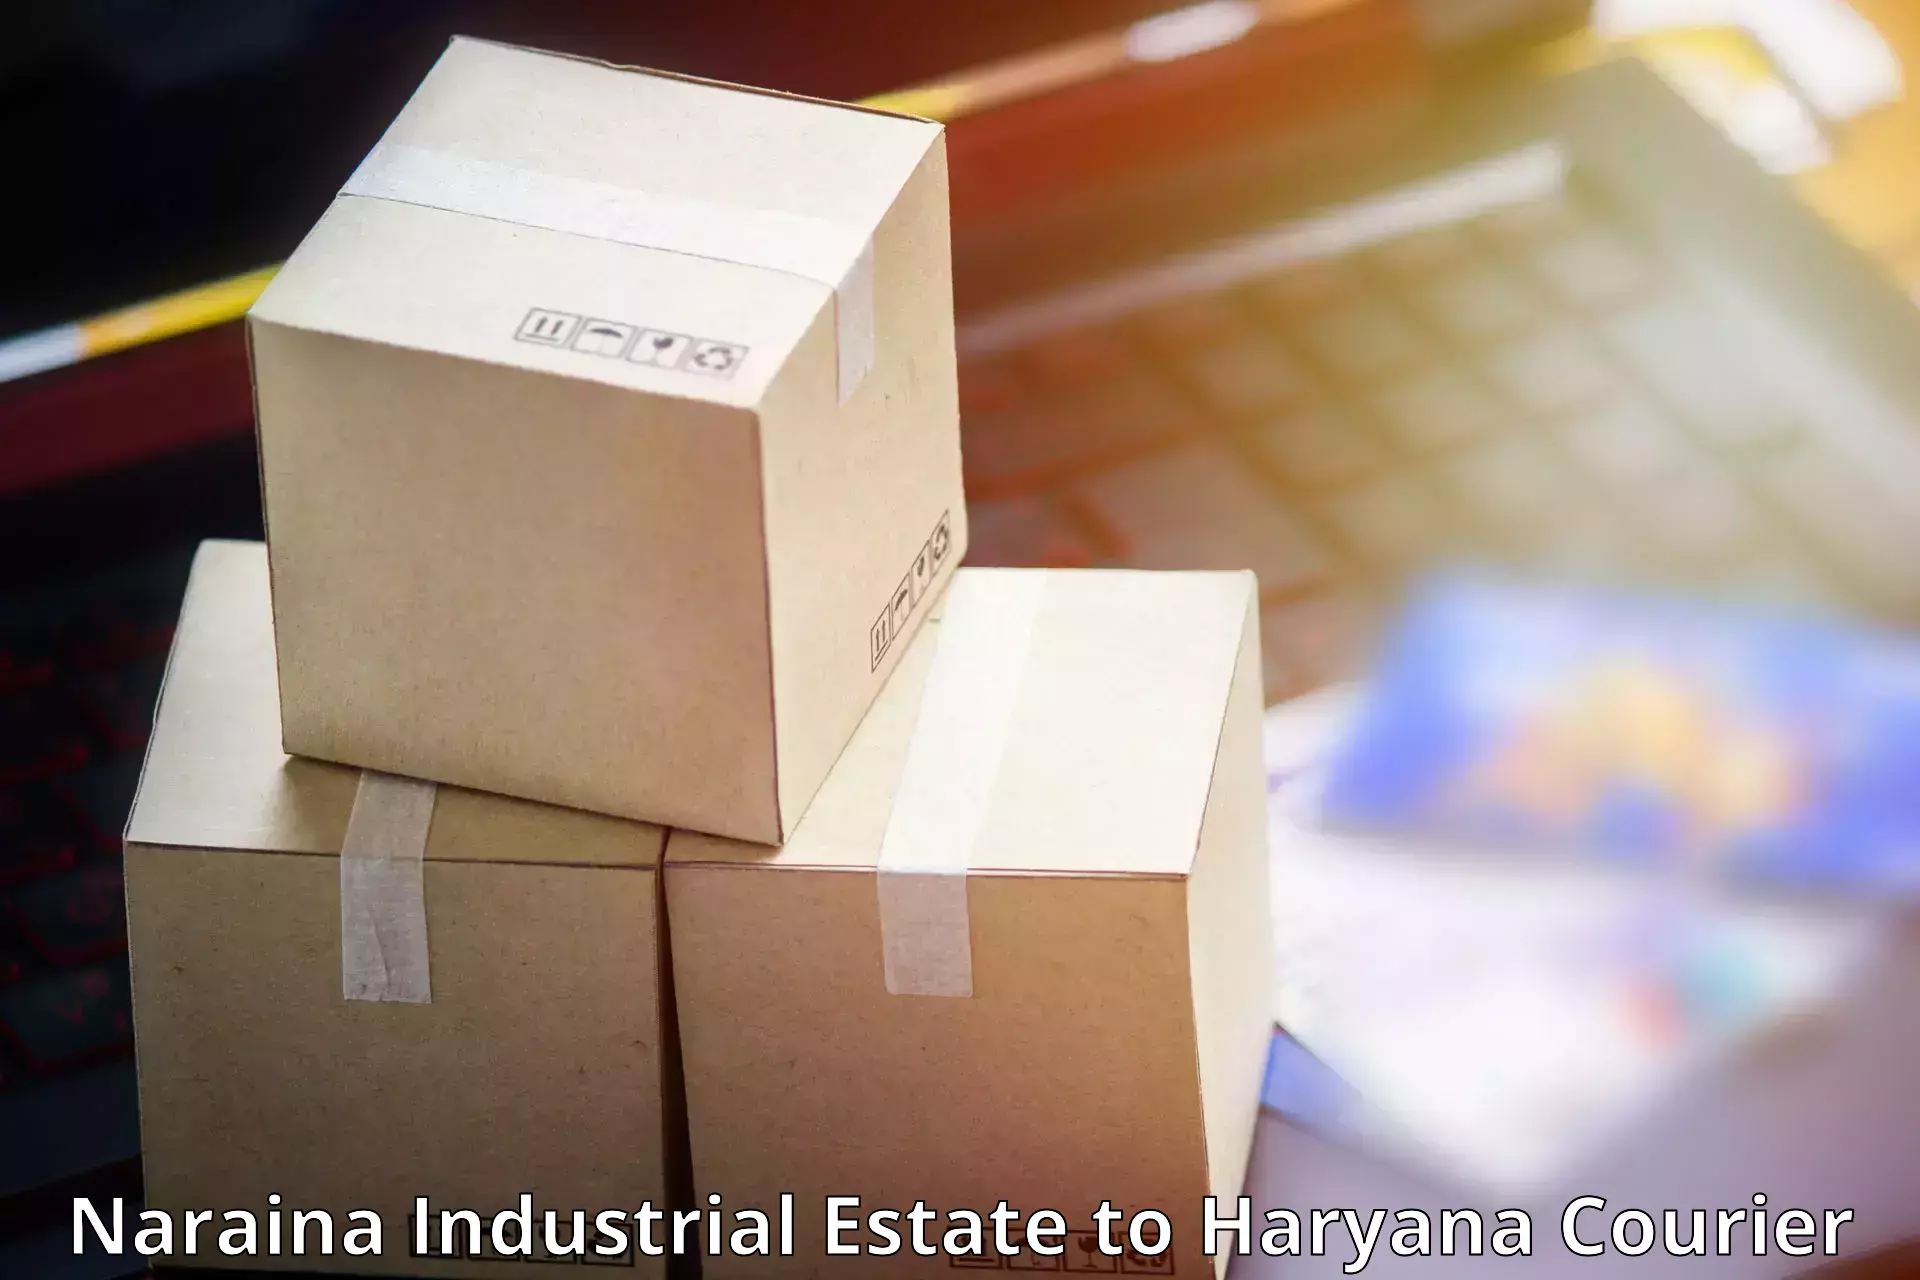 Bulk shipment Naraina Industrial Estate to NCR Haryana